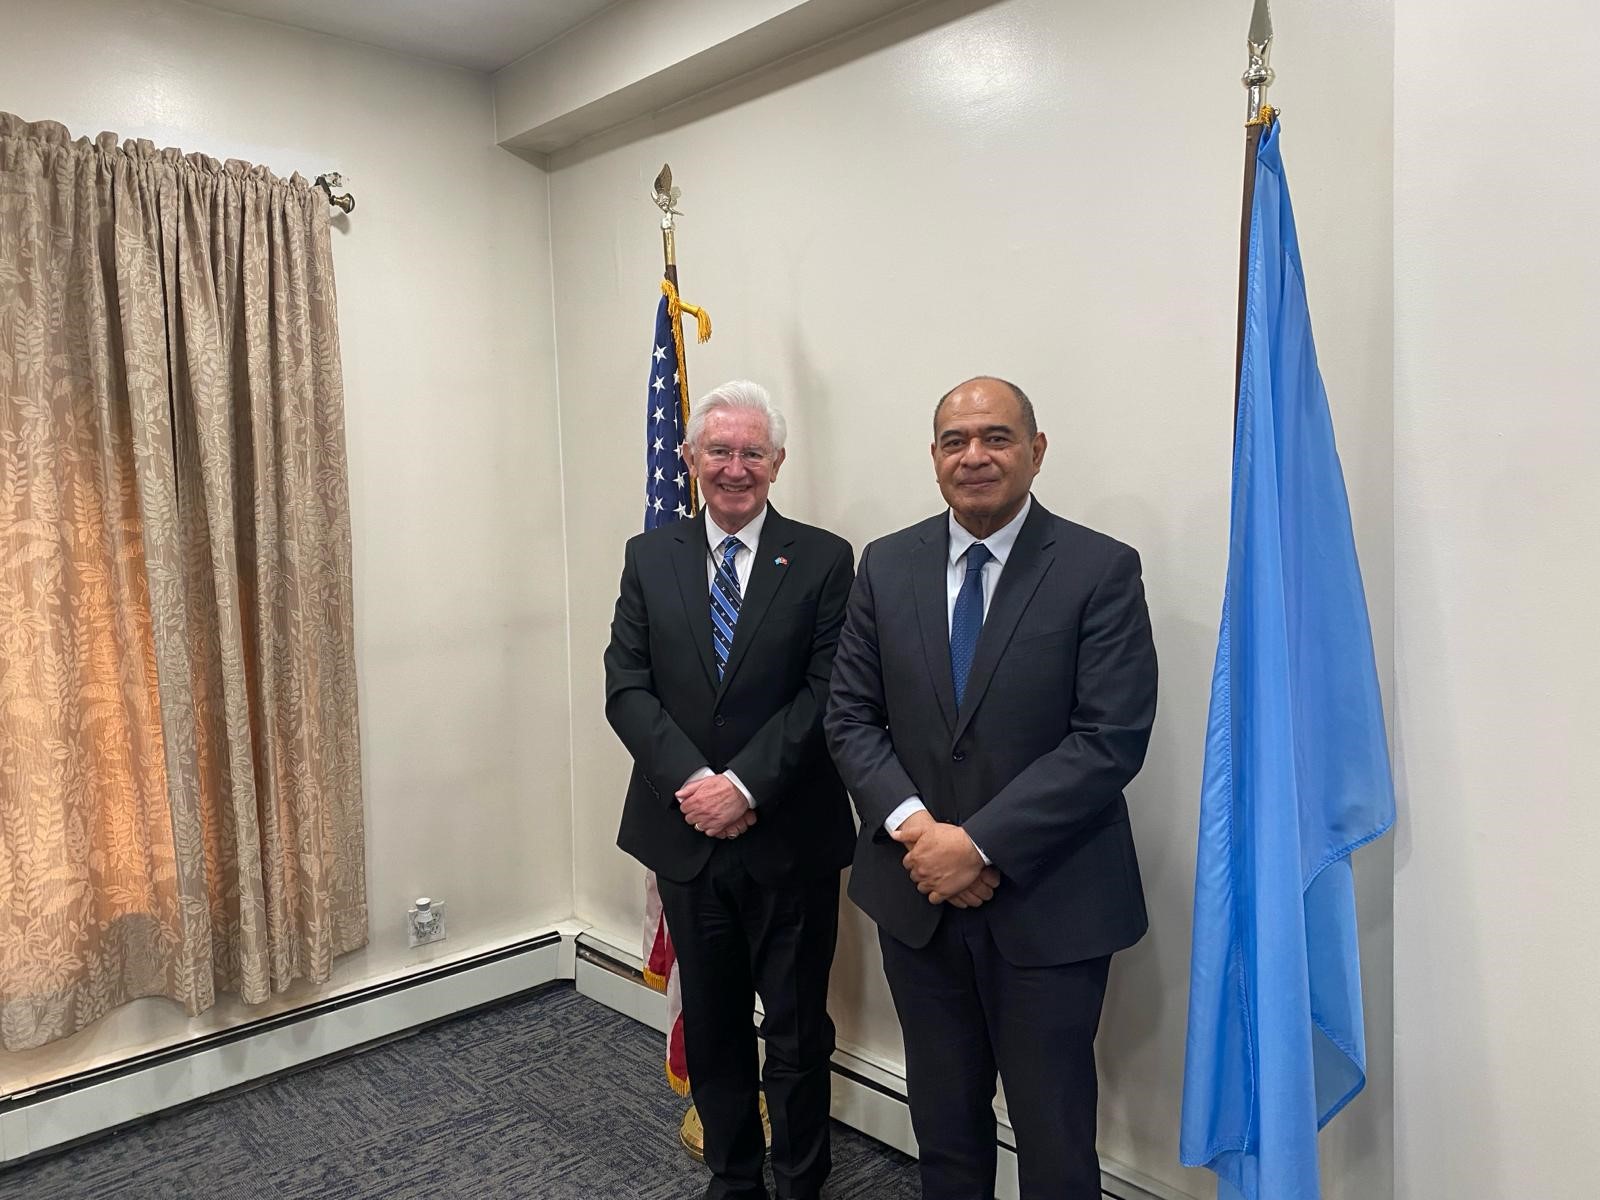 H. E. Ambassador Paul Beresford-Hill met with H.E. Viliami Va’inga Tōnē, Permanent Representative of the Kingdom of Tonga to the United Nations